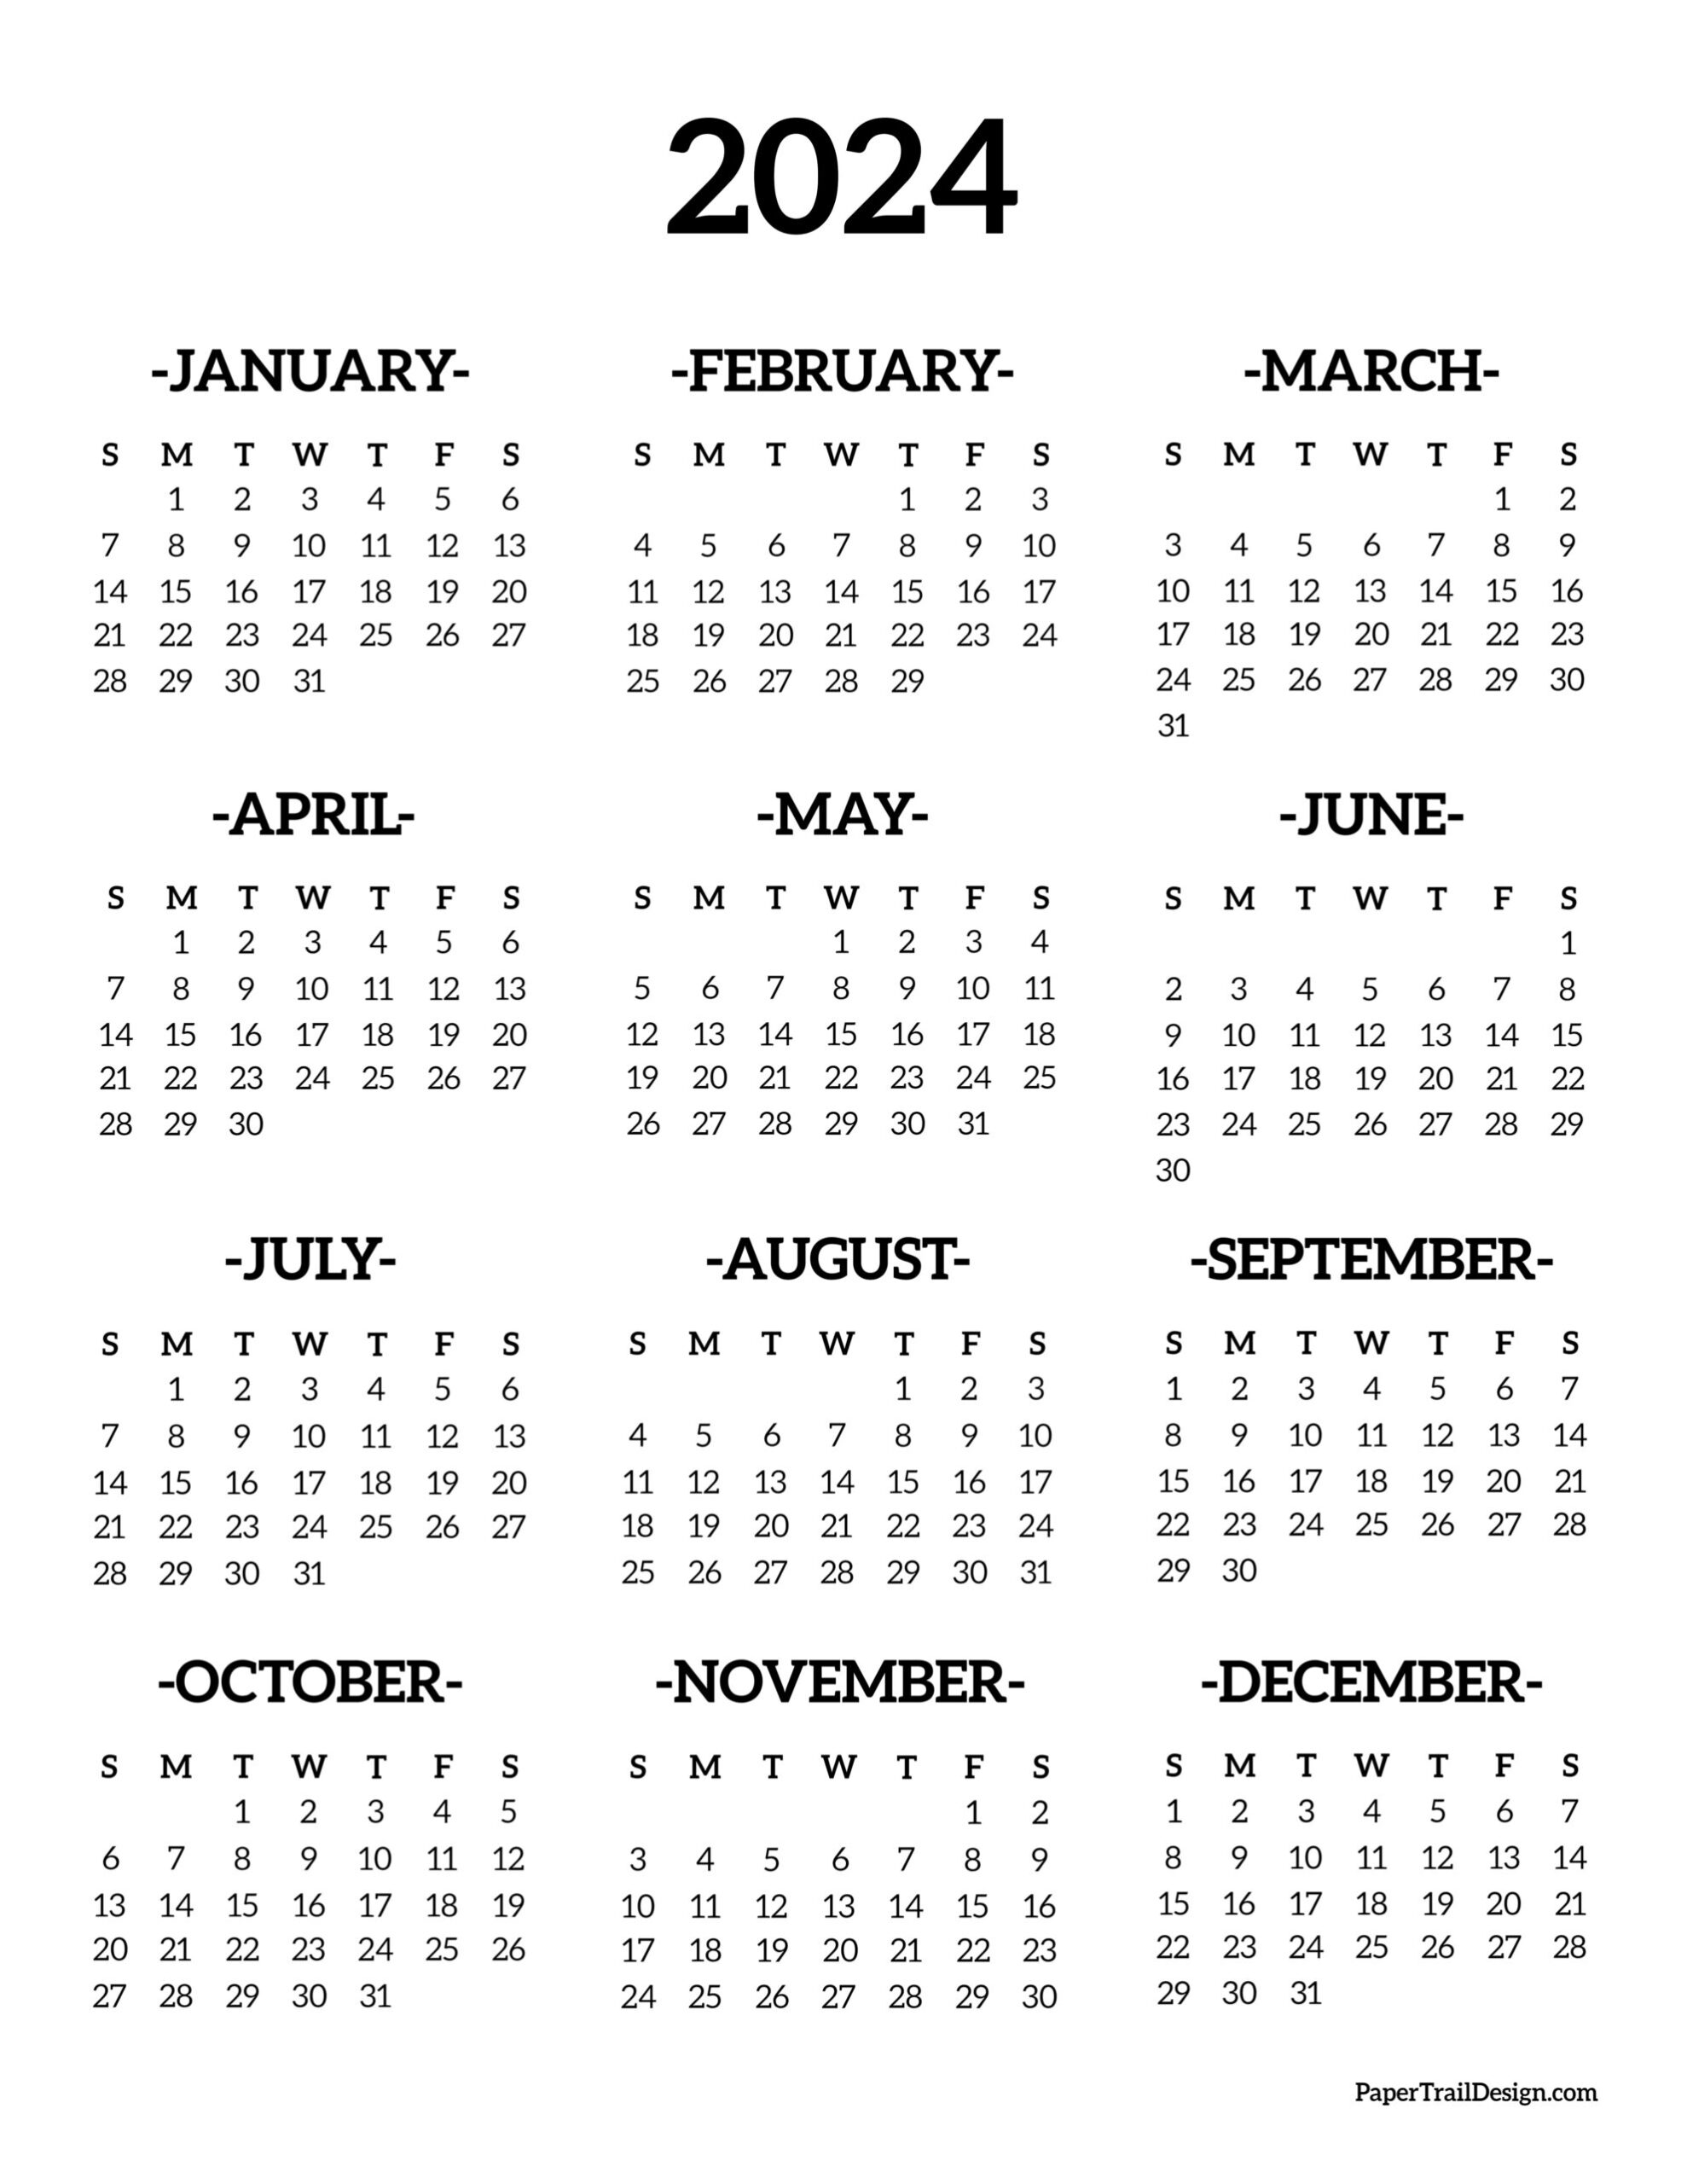 Calendar 2024 Printable One Page - Paper Trail Design for Free Printable Calendar 2024